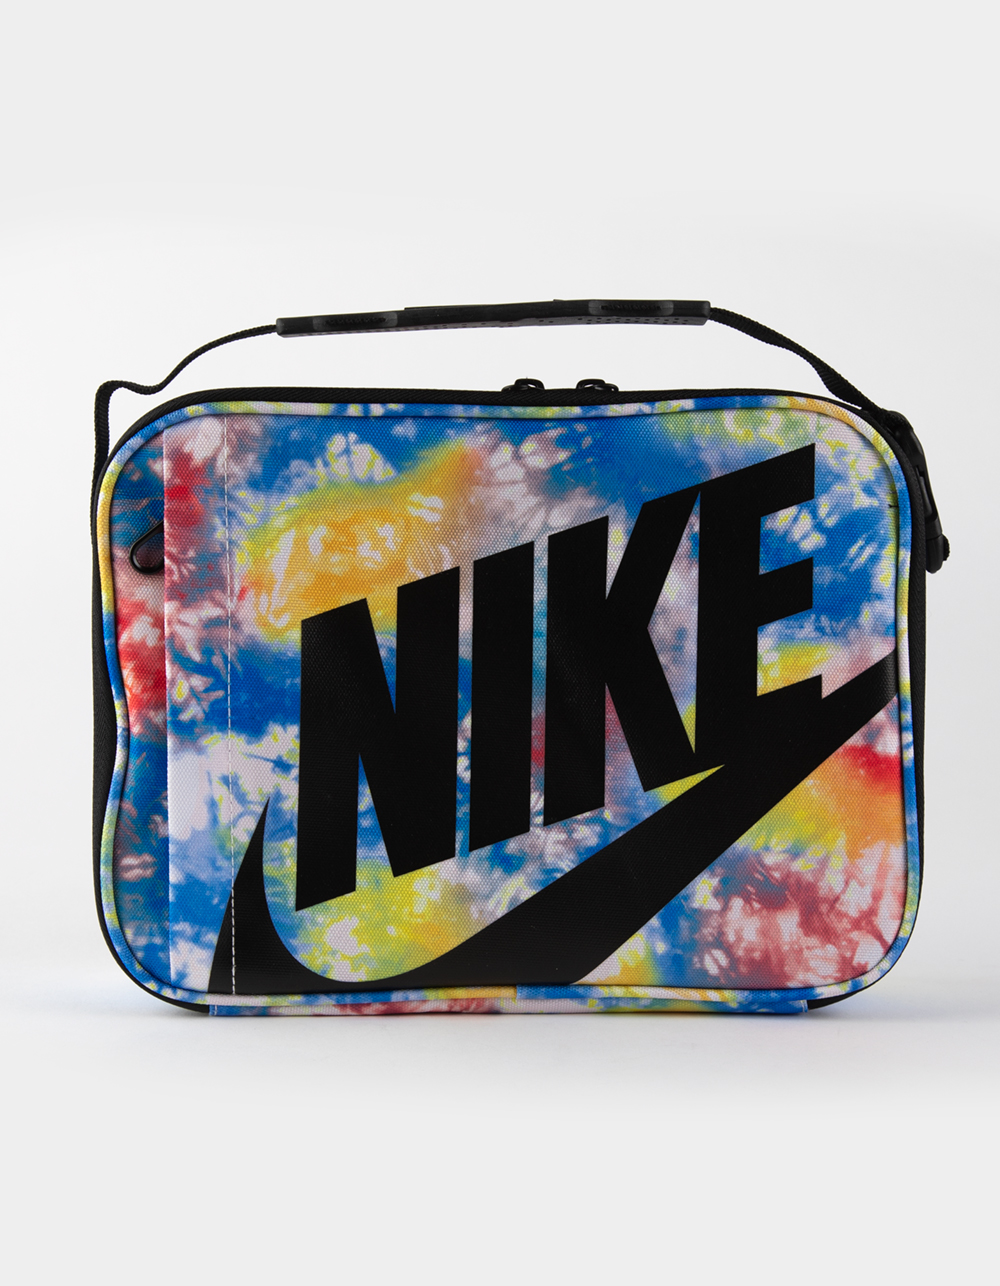 Nike Futura Fuel Tote Lunch Bag